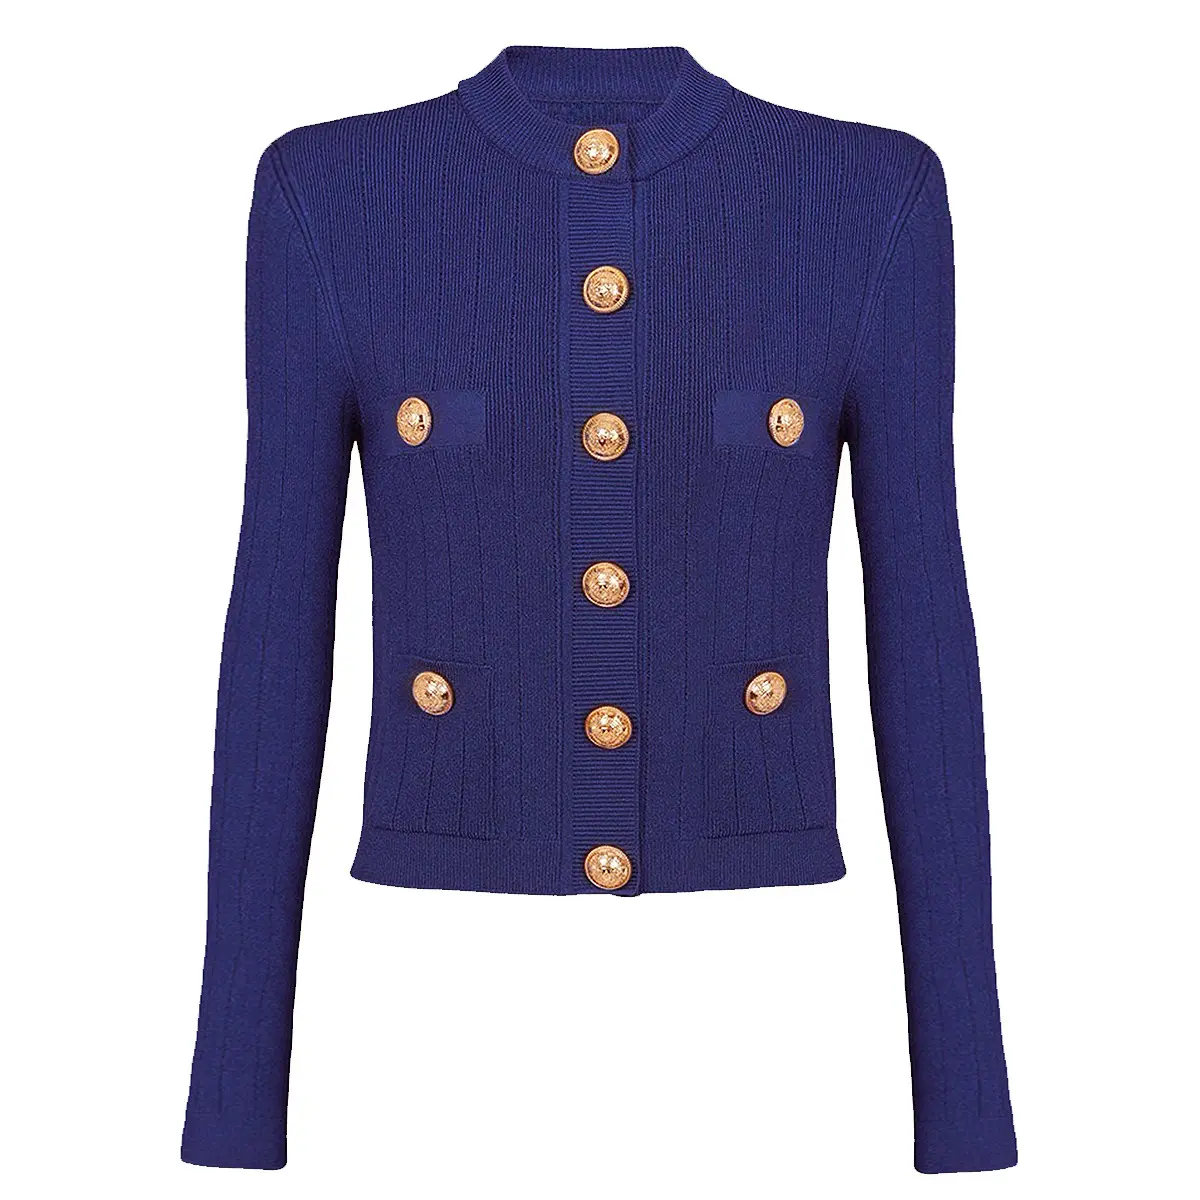 New dropshipping wholesale hot fashion and elegant knitwear long sleeve crewneck button up cardigan woolen jacket women